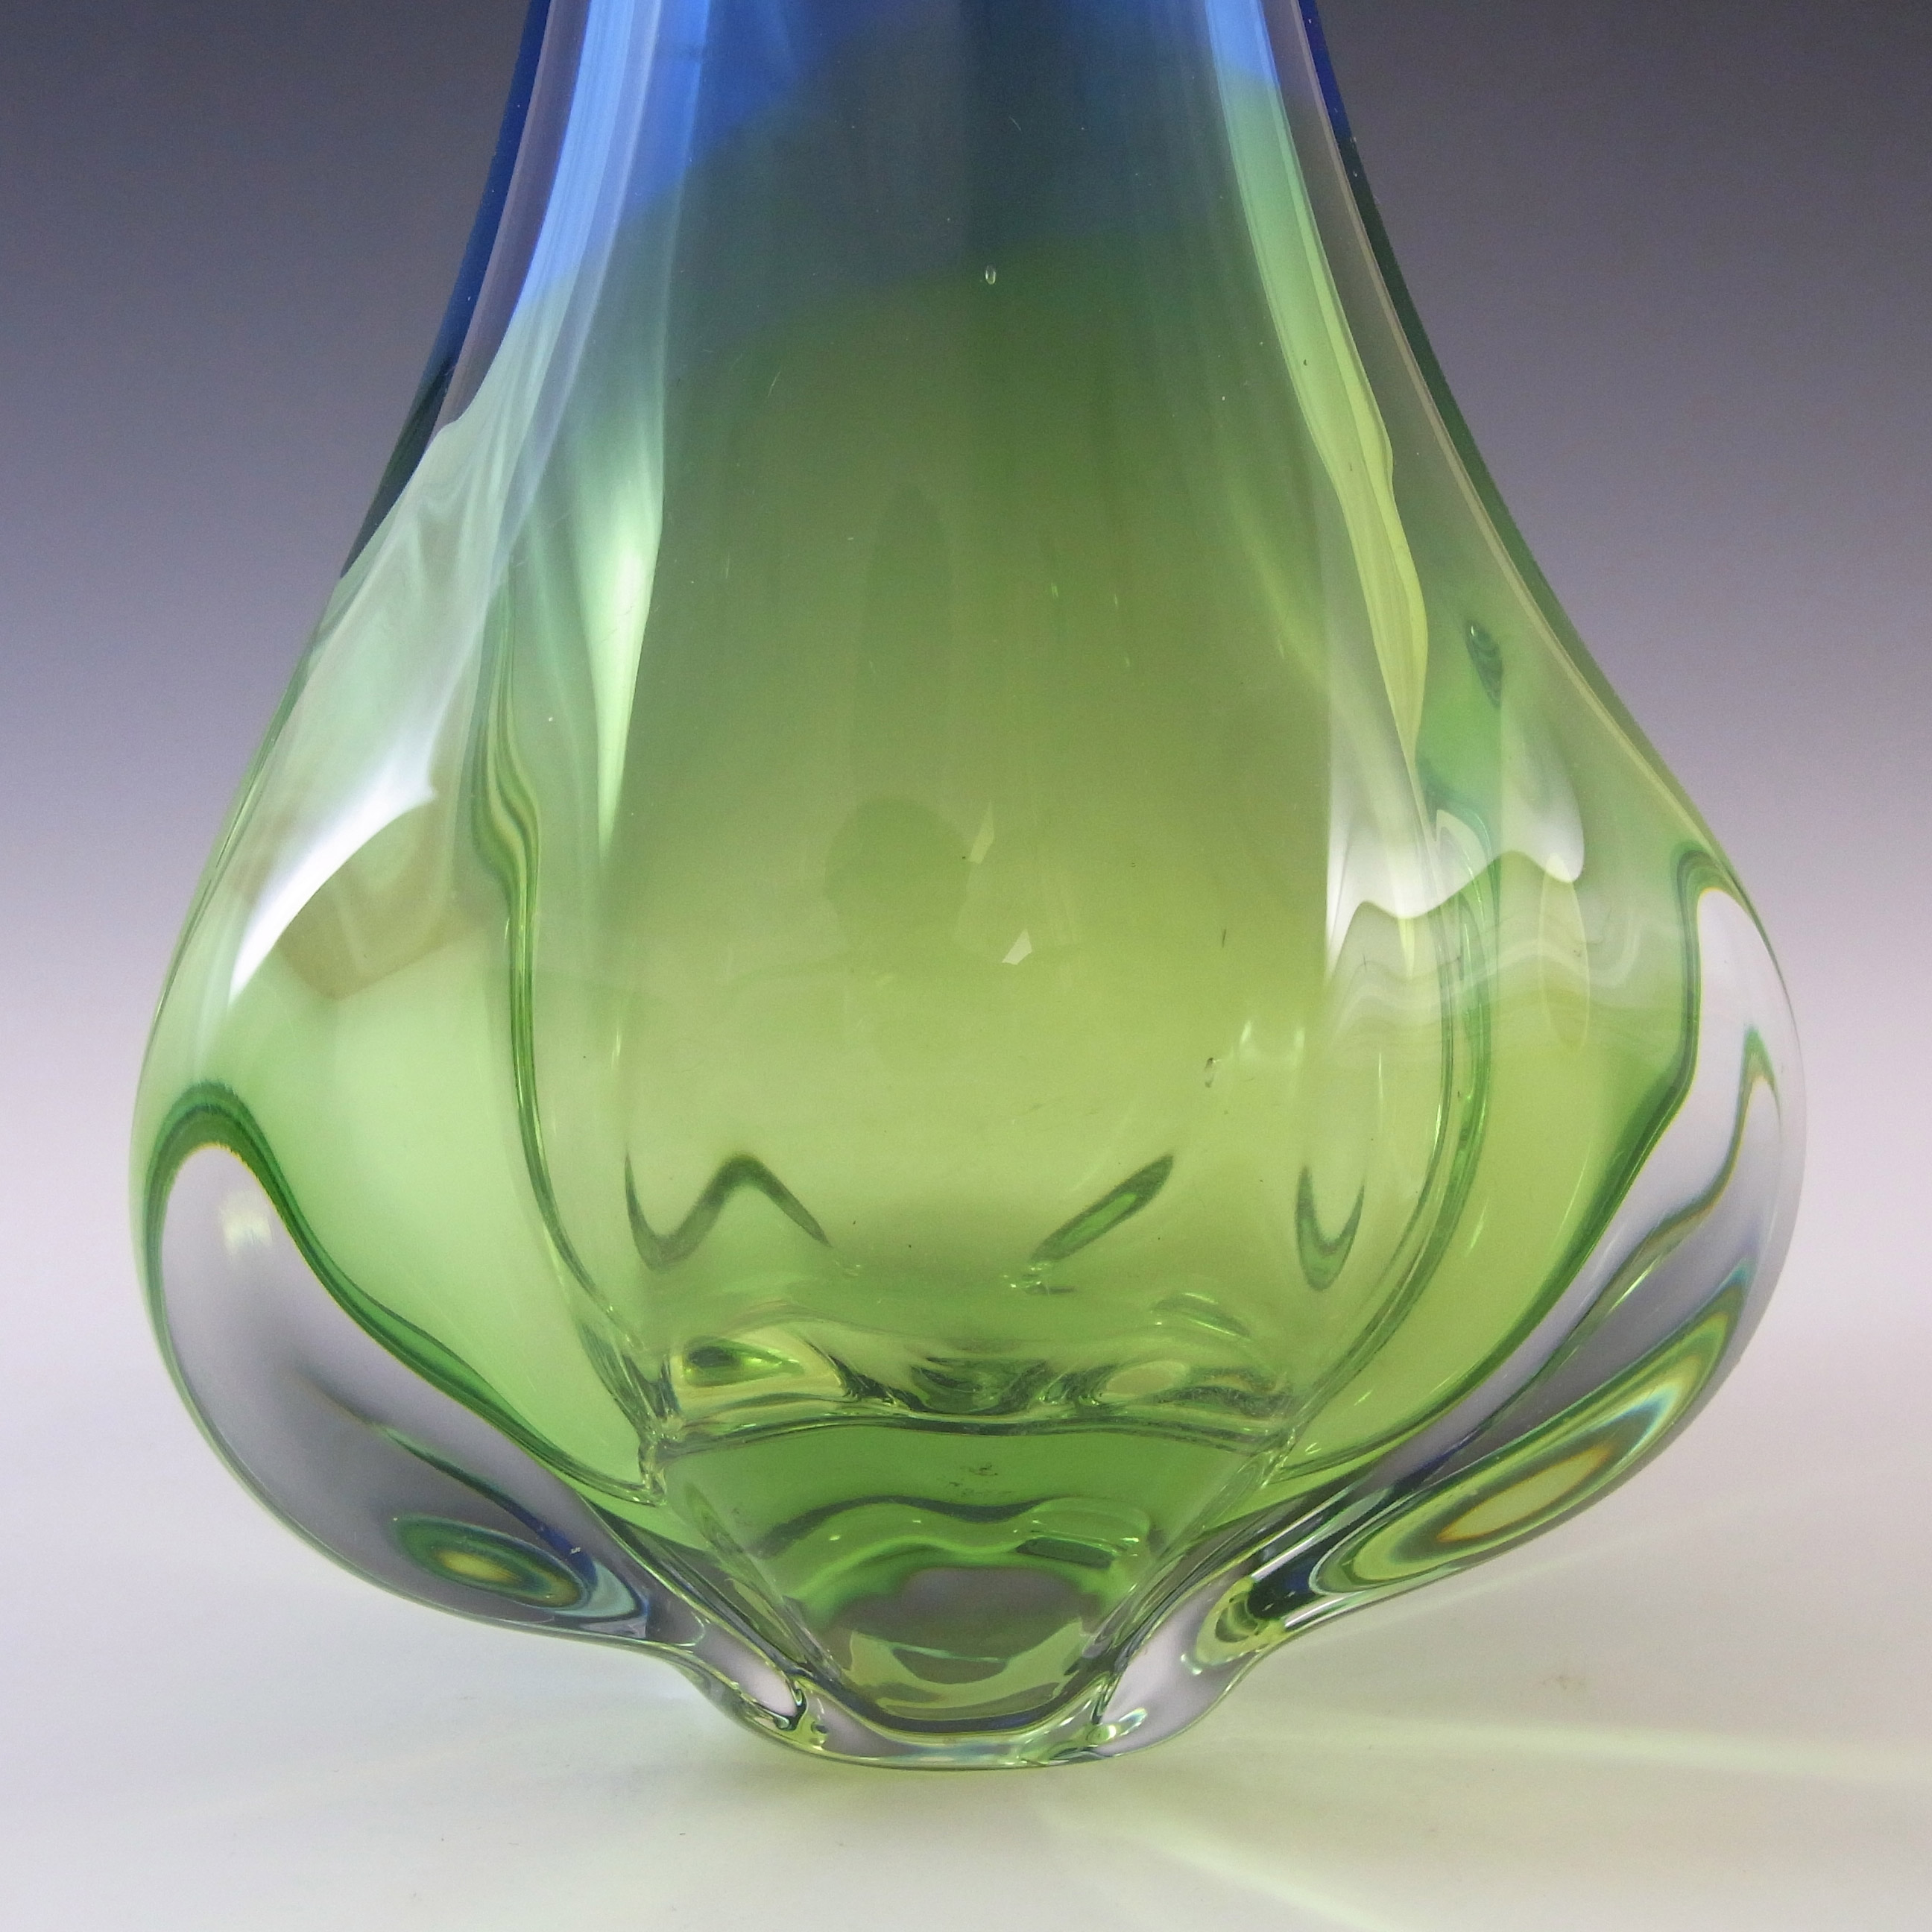 Chřibská Organic Czech Blue & Green Glass Vase - Click Image to Close